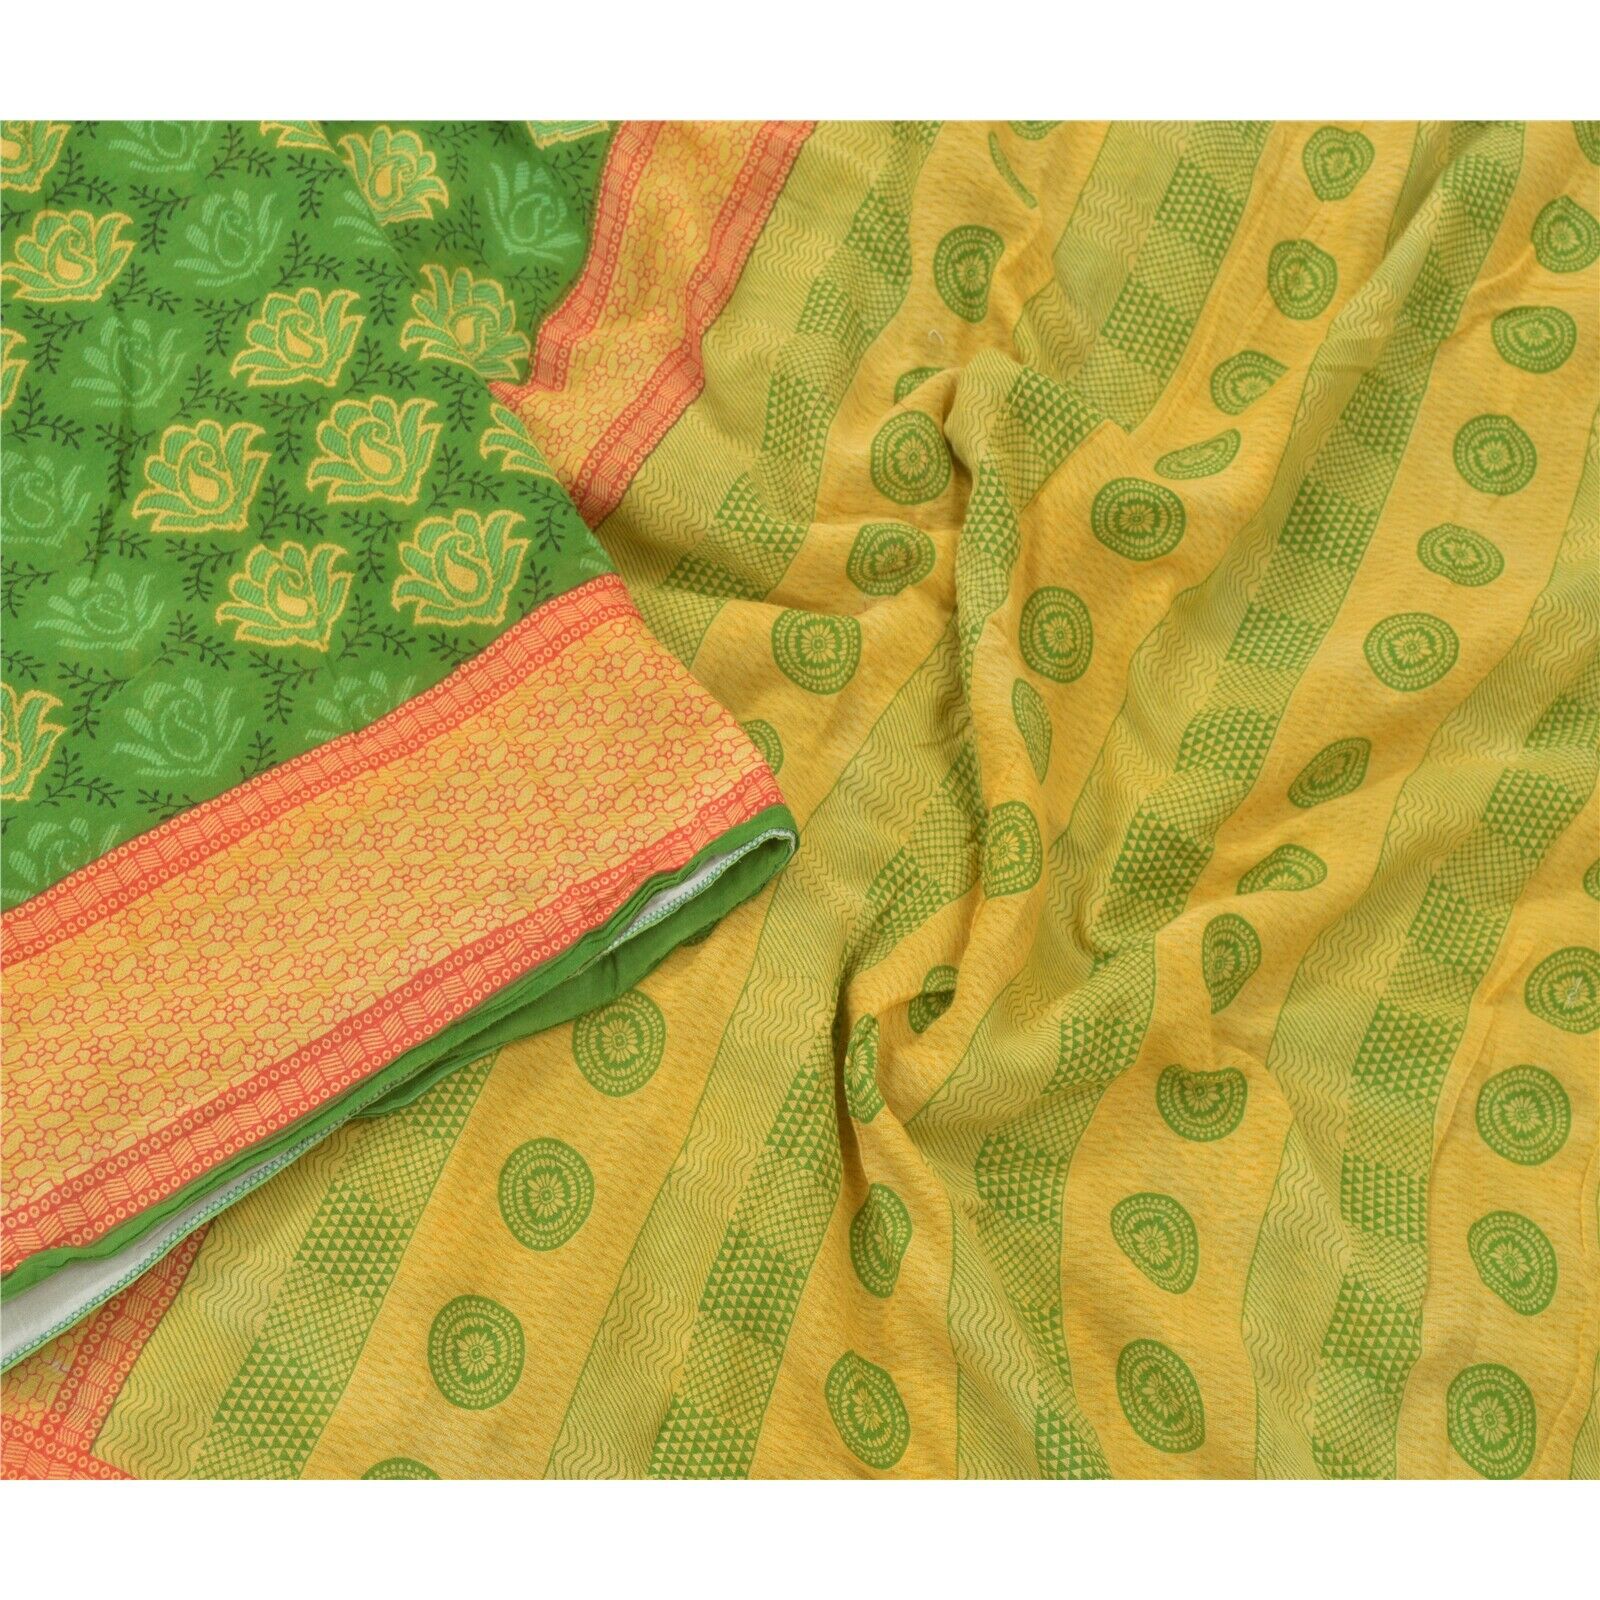 Sanskriti Vintage Indian Green Sarees Pure Cotton Printed Sari 5yd Craft Fabric